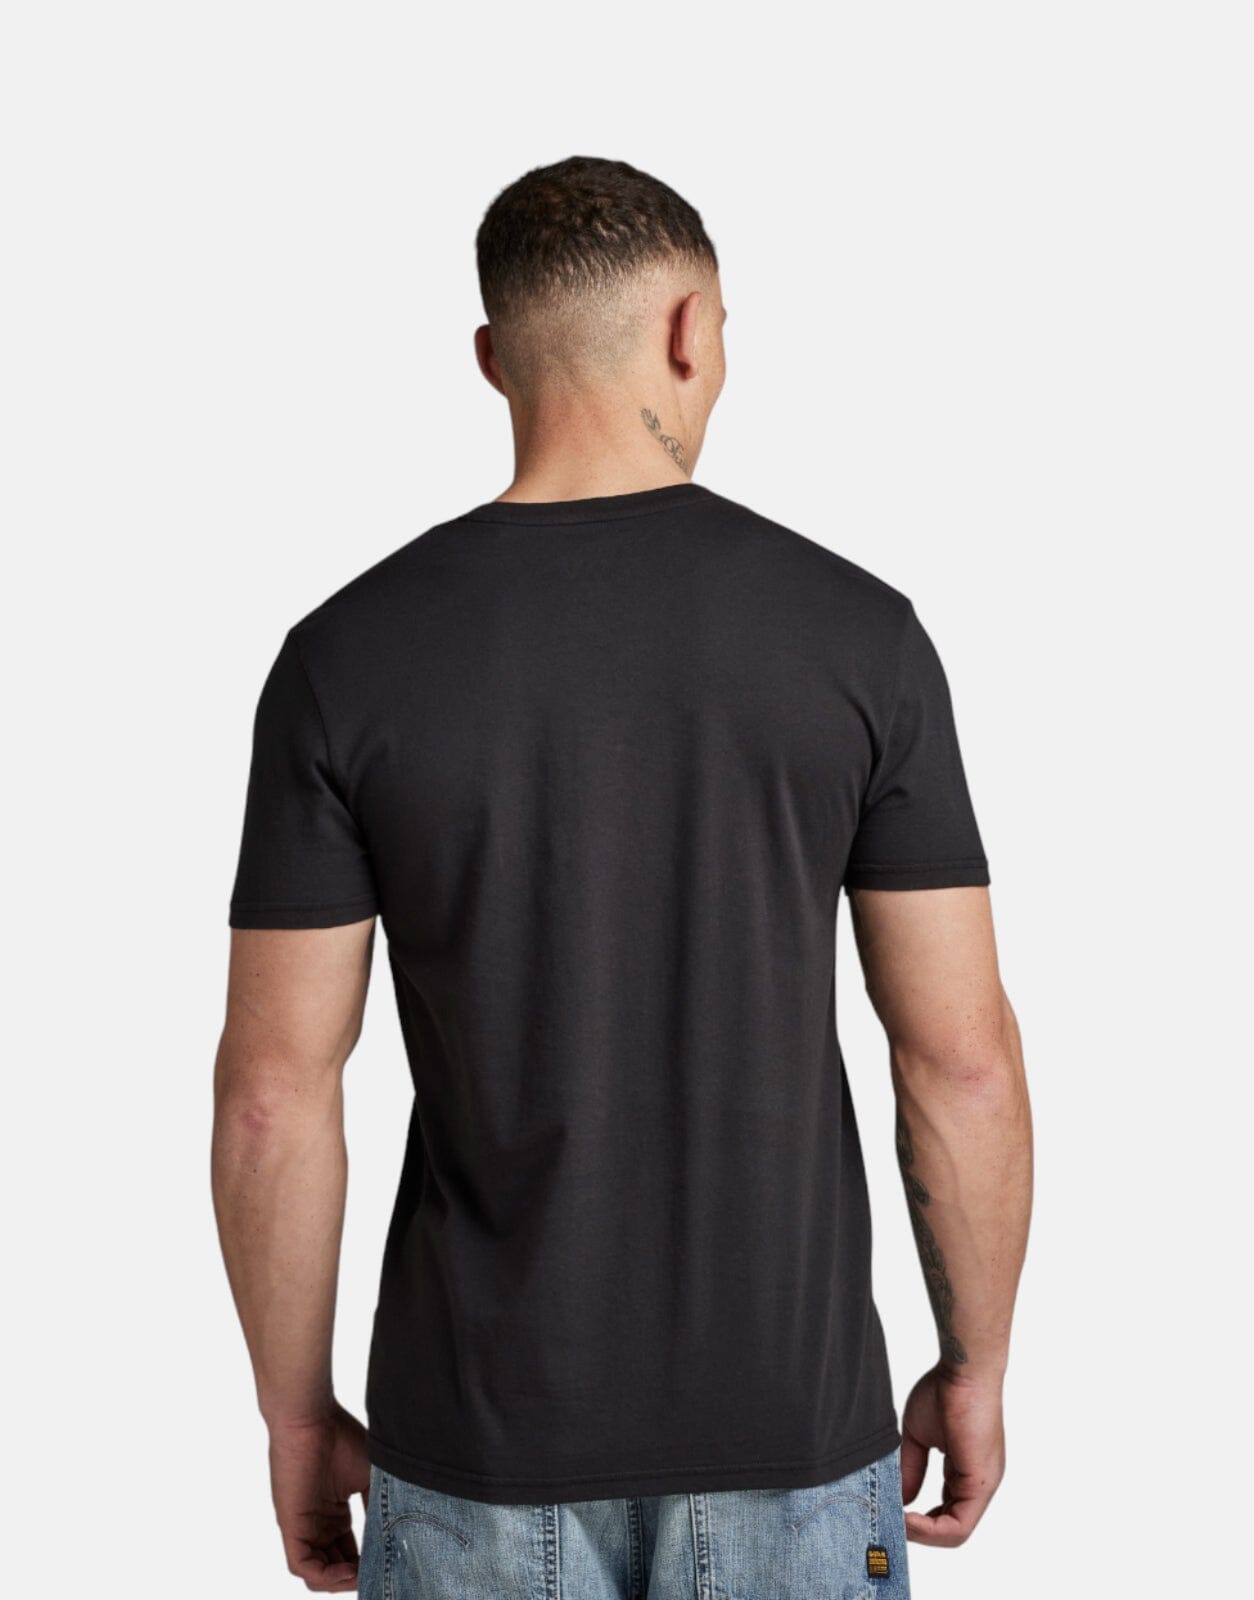 G-Star RAW Distressed Logo Black T-Shirt - Subwear